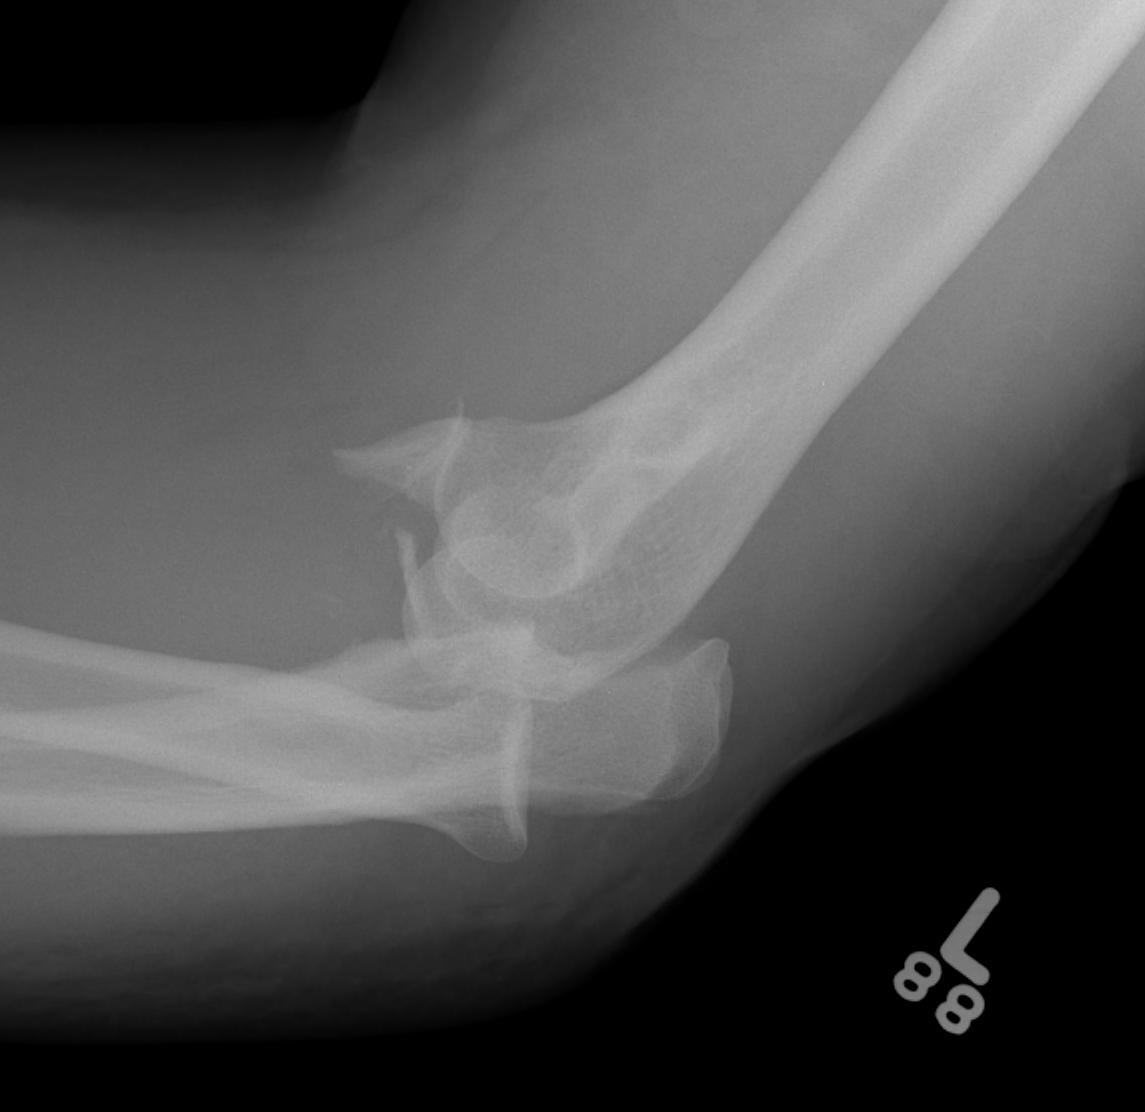 Elbow Dislocation Large Coronoid Fragment